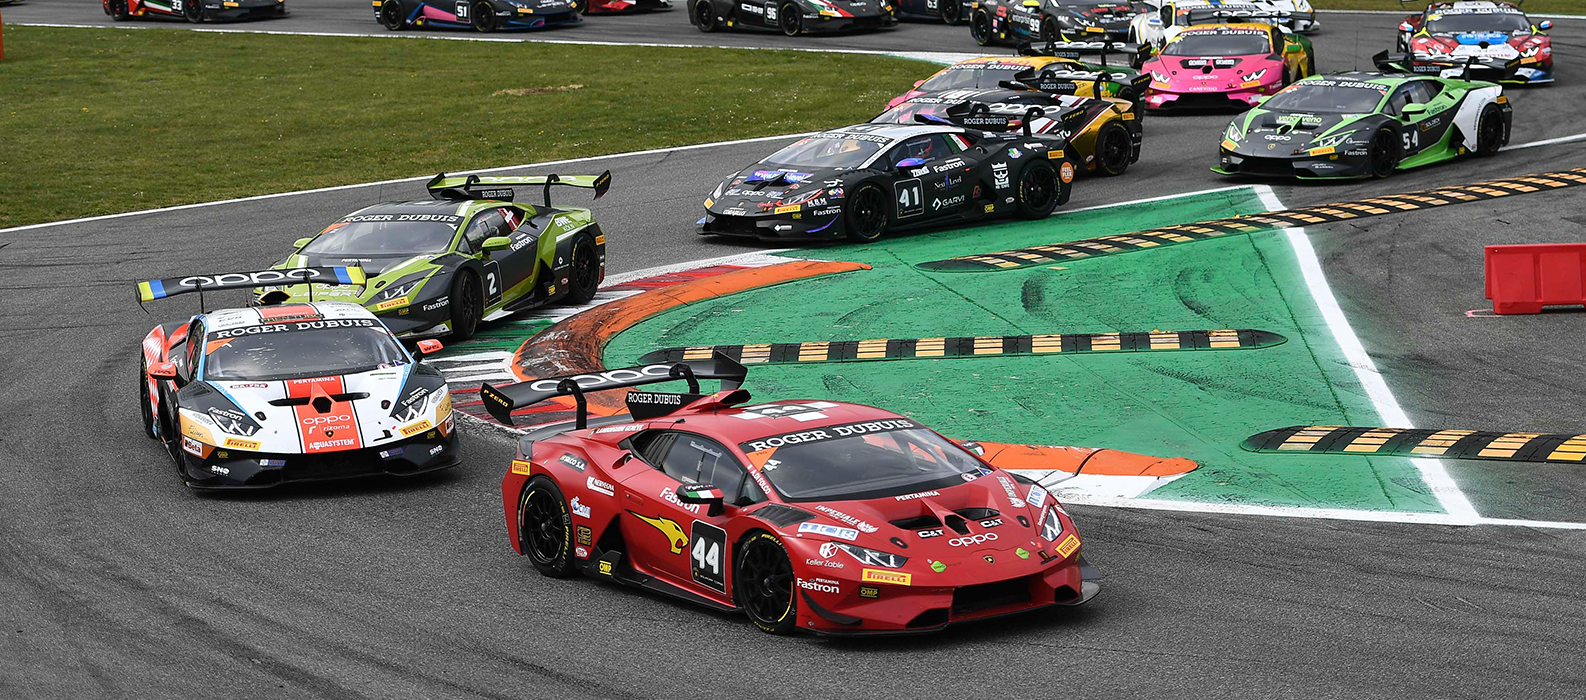 Super Trofeo Europe kicks off in Monza